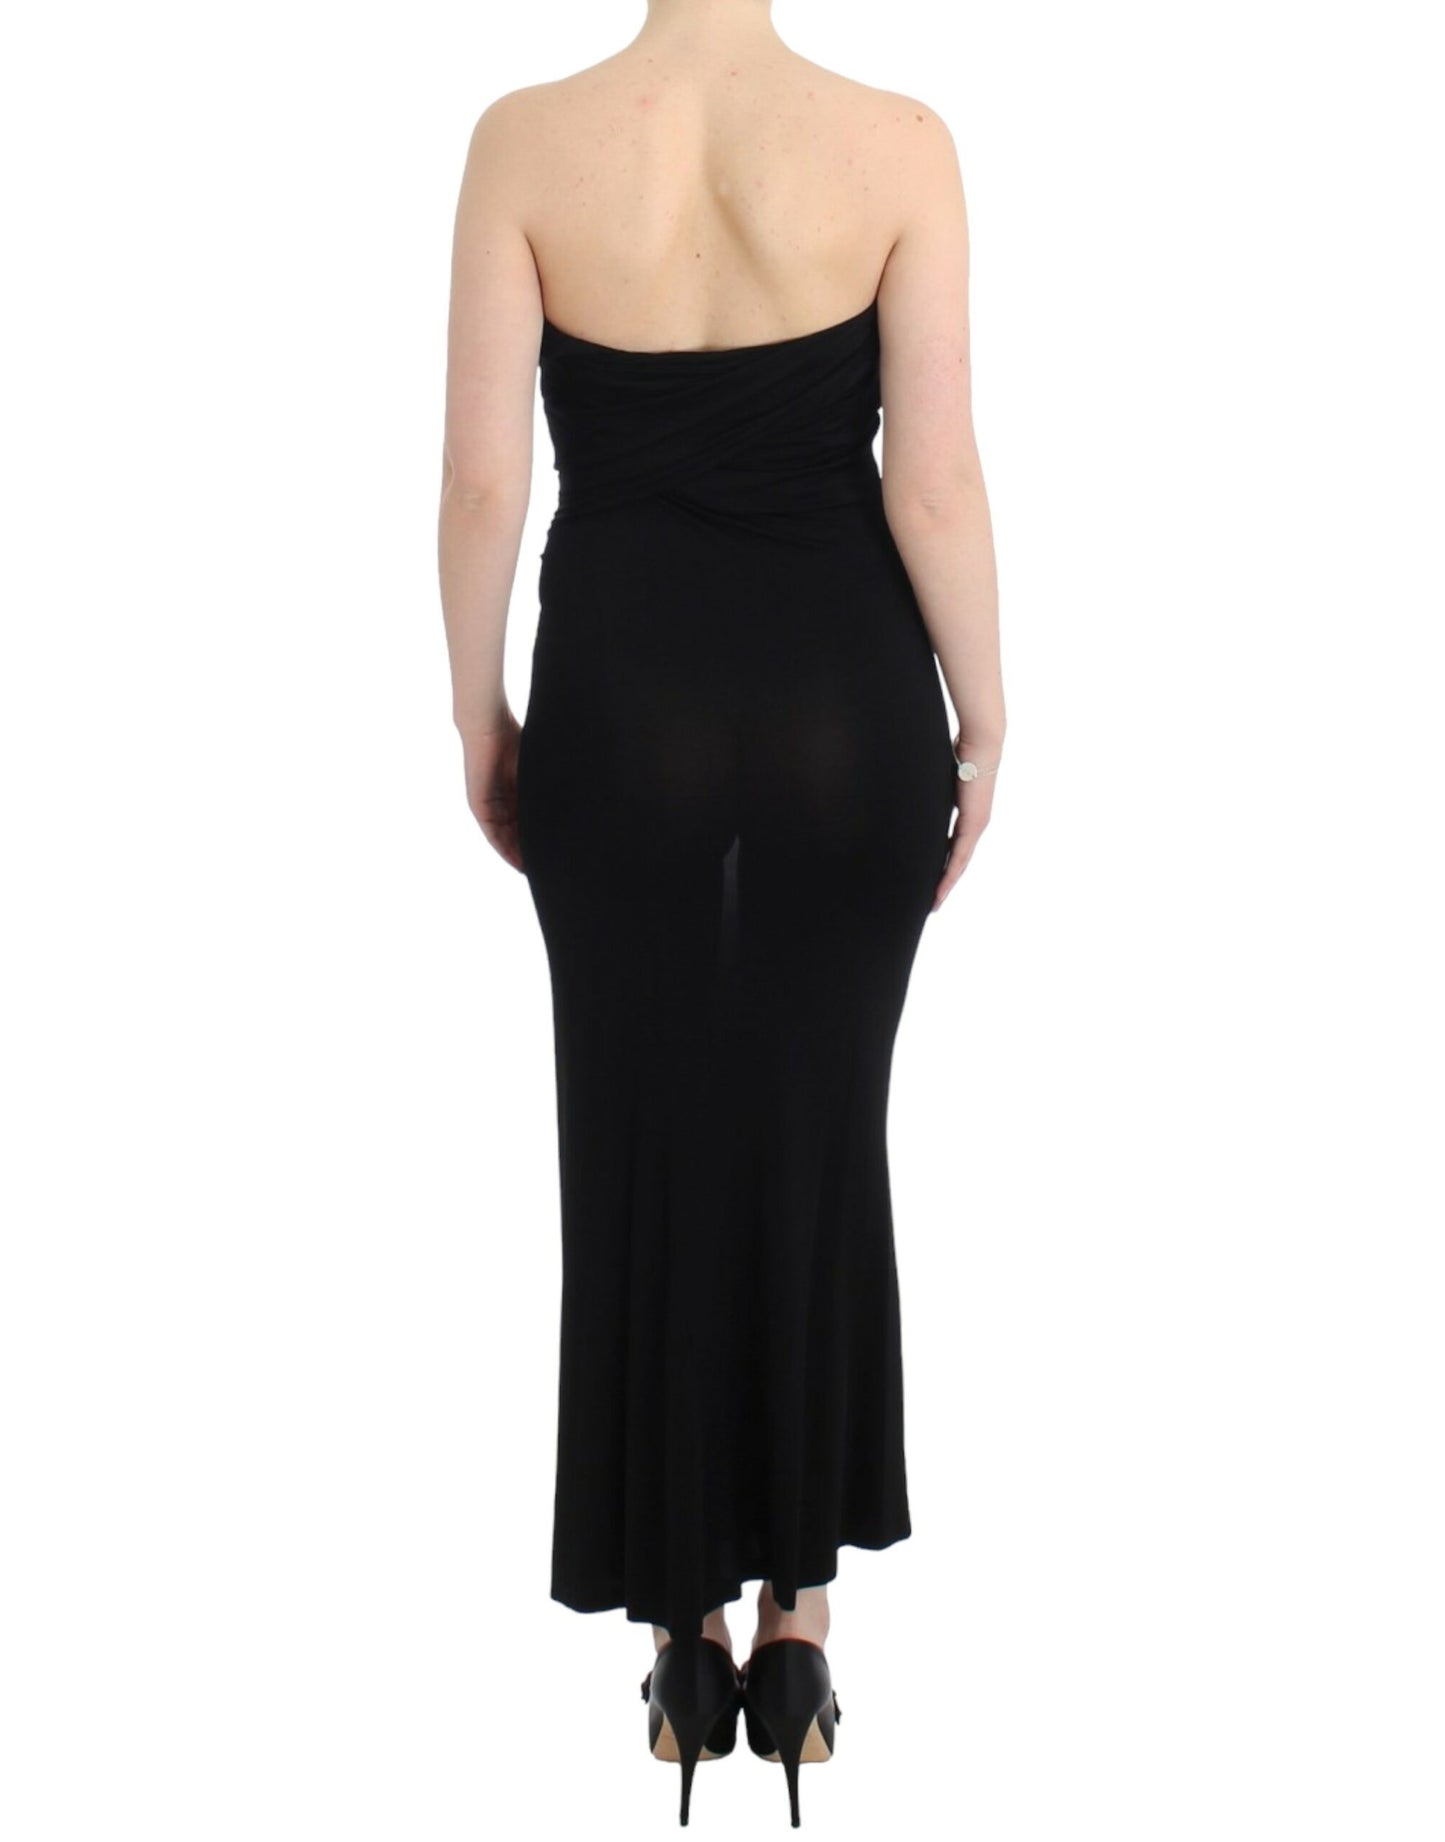 Elegant Strapless Black Maxi Dress